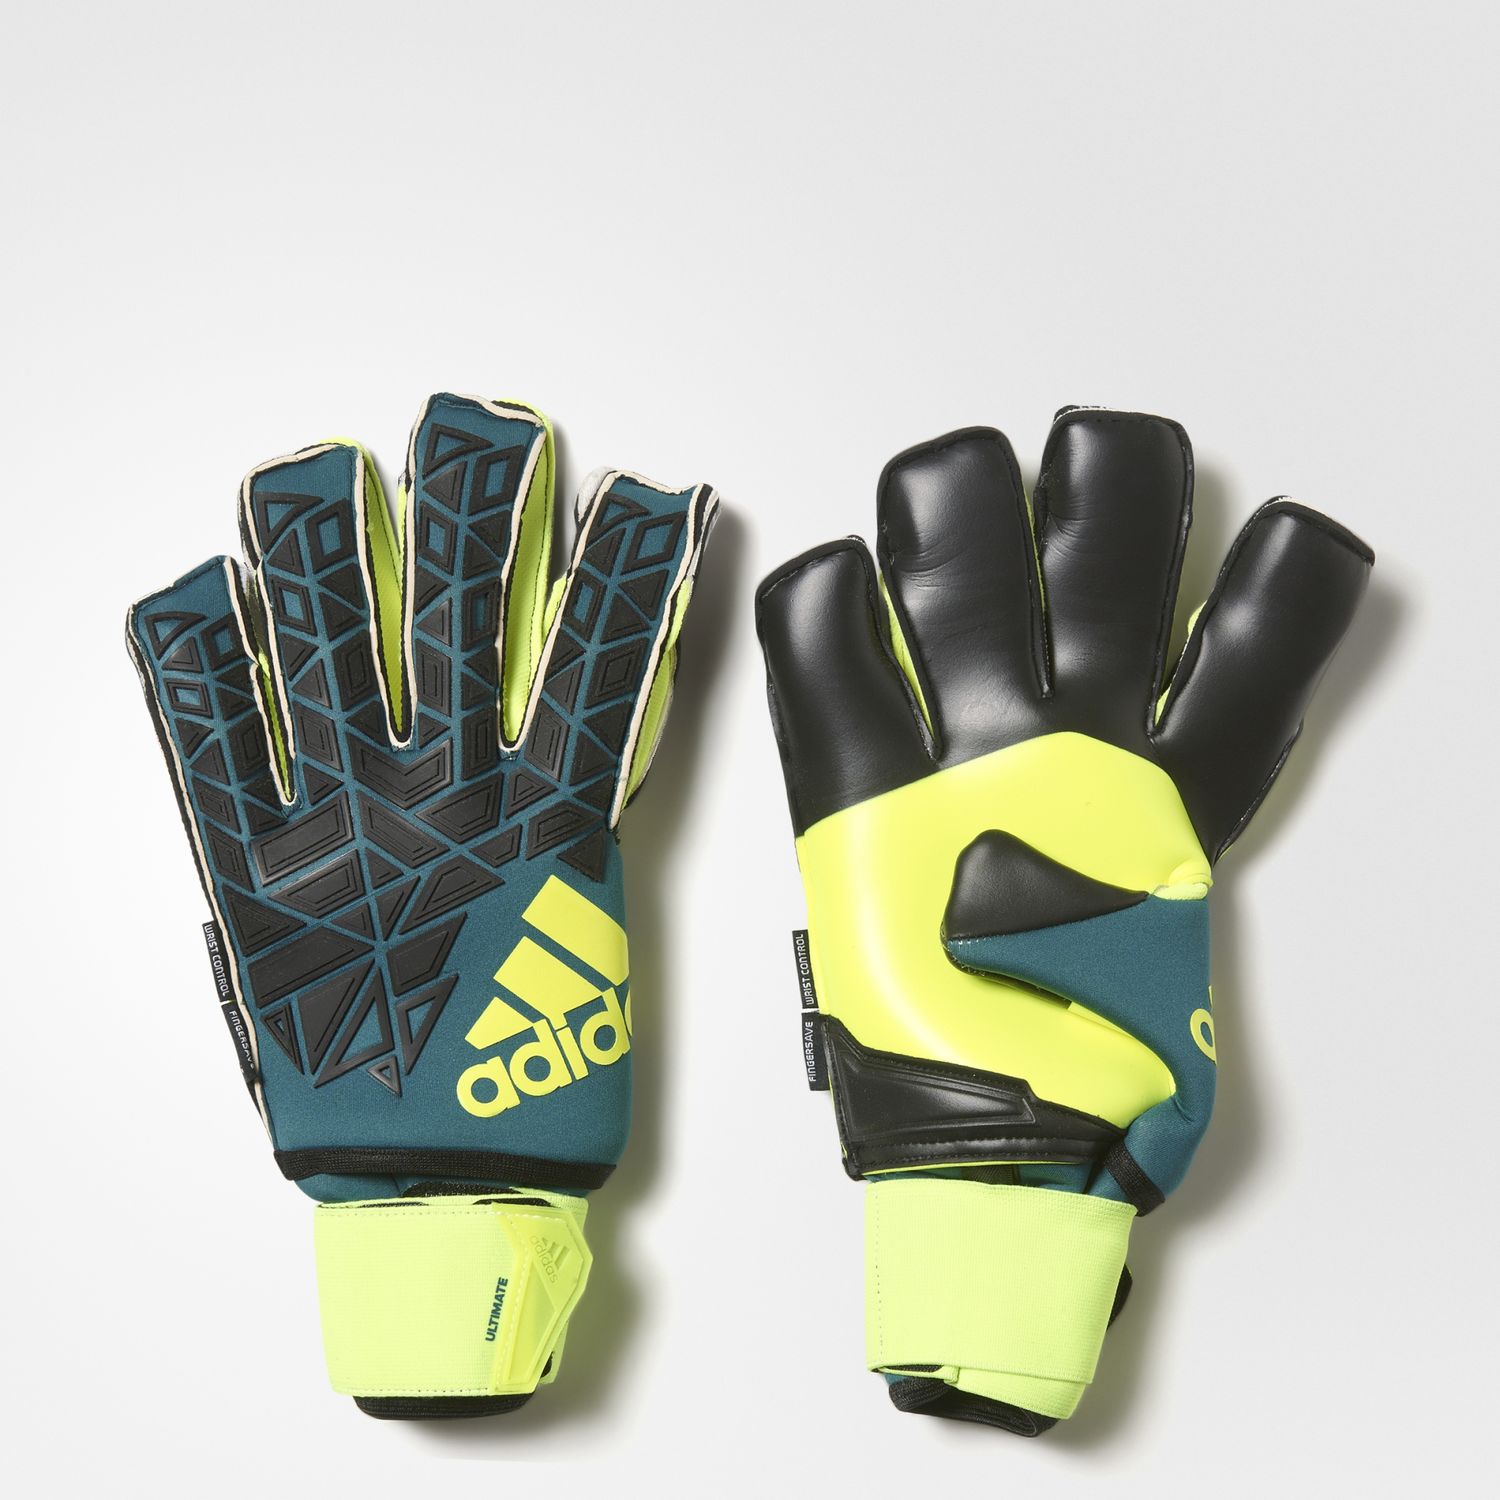 ACE Ultimate Fingersave Goalkeeper Glove